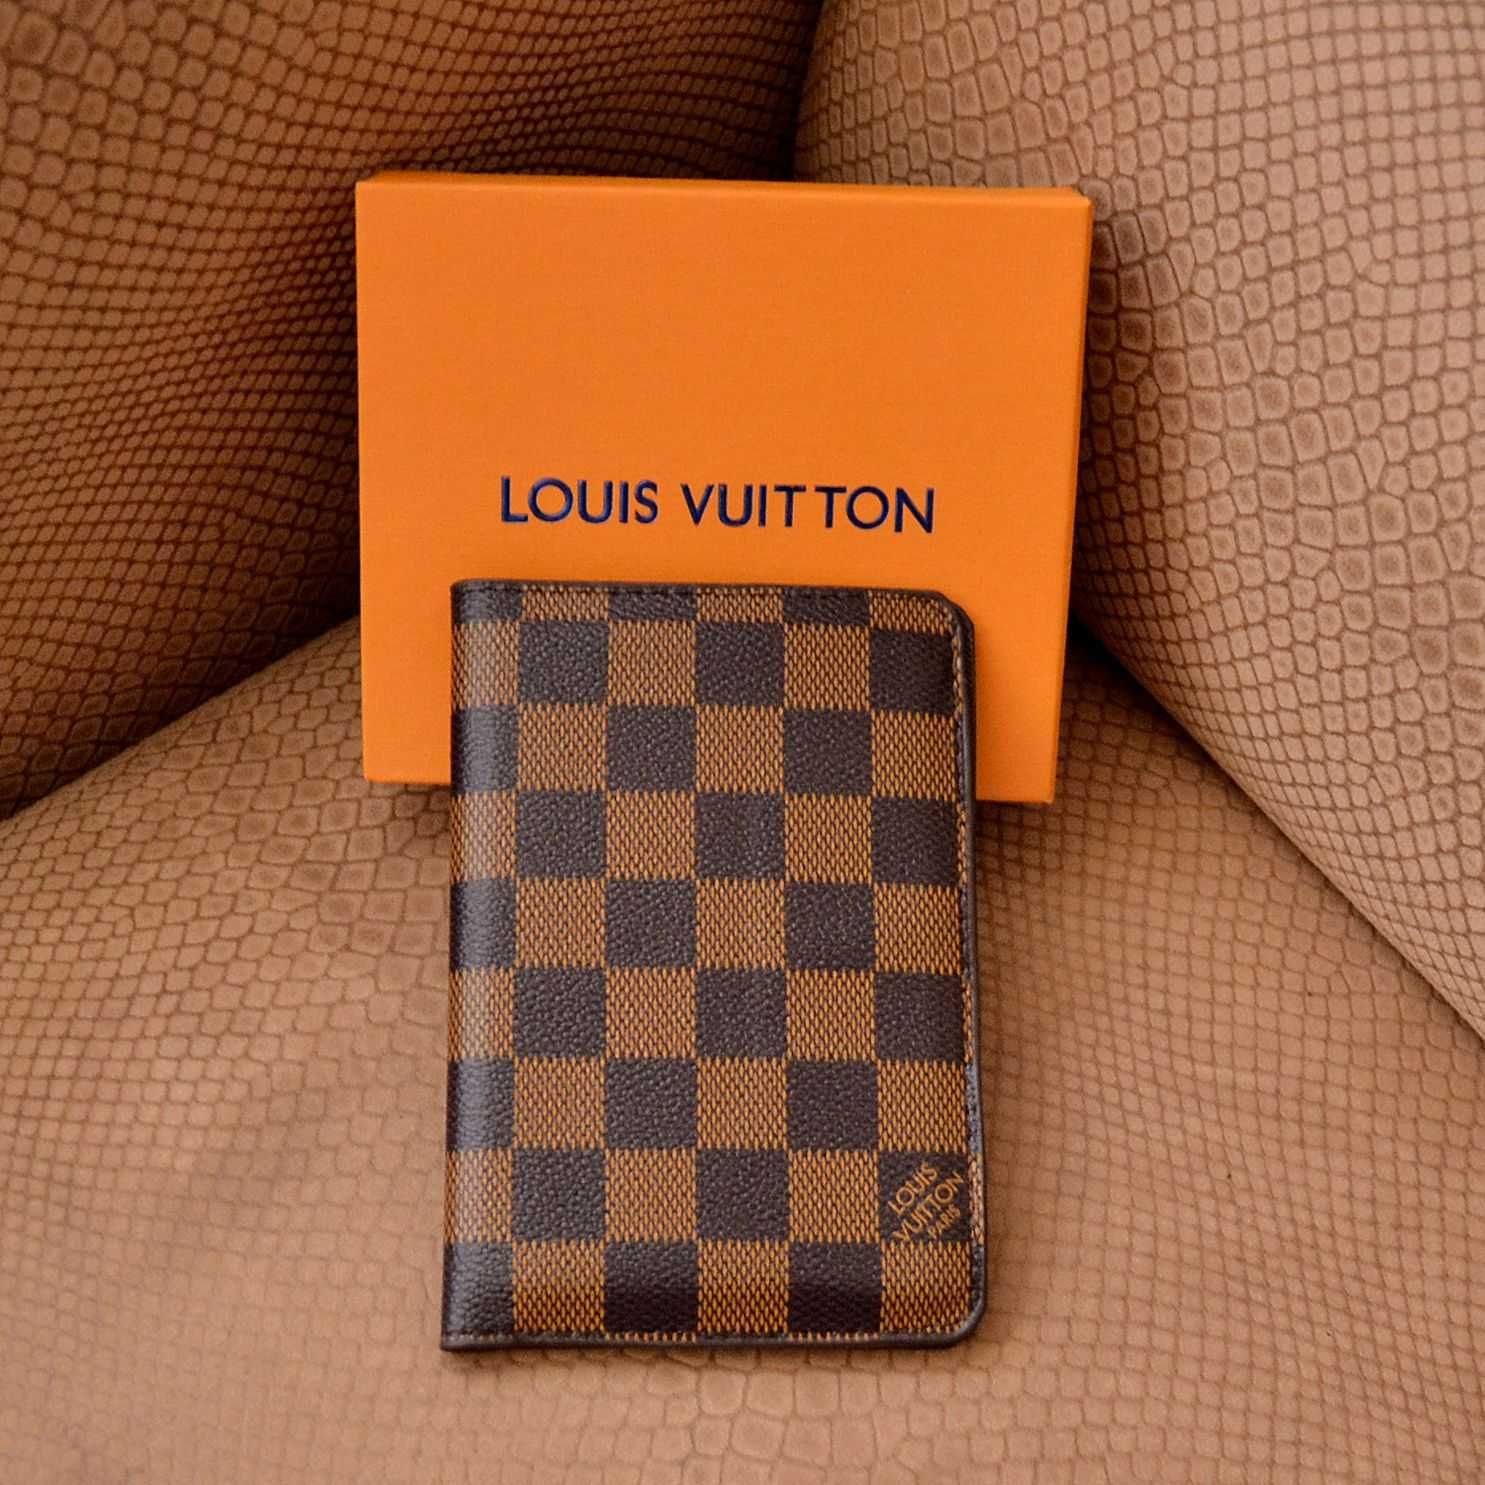 Обложка на паспорт Louis Vuitton обкладинка загранпаспорт на документы